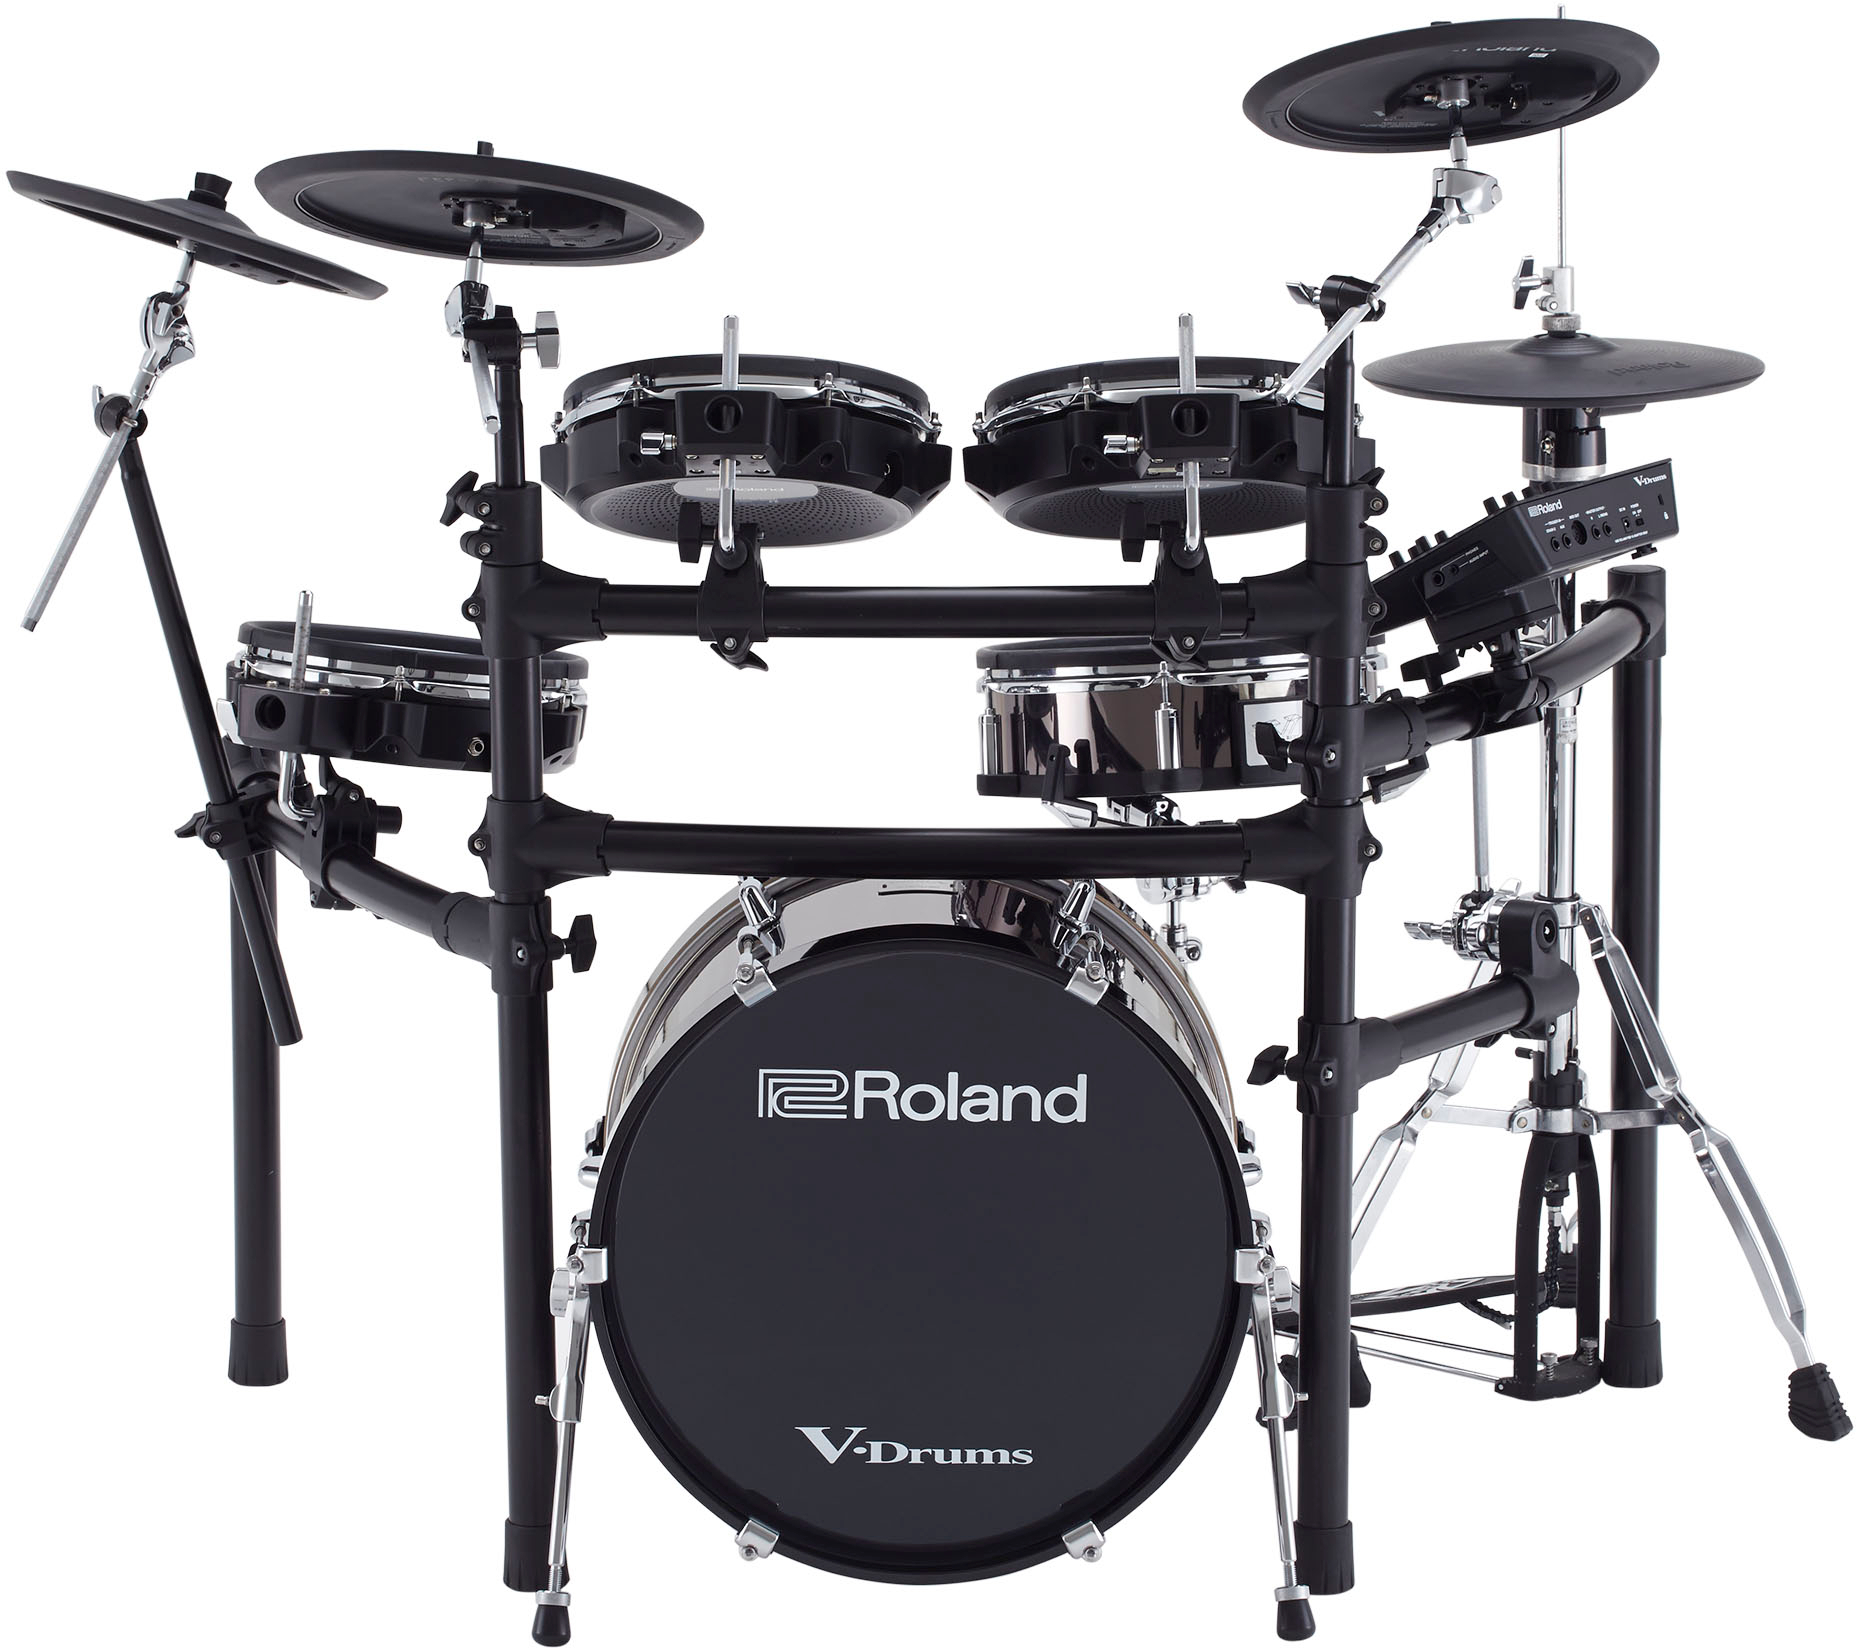 Roland Grosse Caisse V-drums Kd-180 - Batería electrónica completa - Variation 3